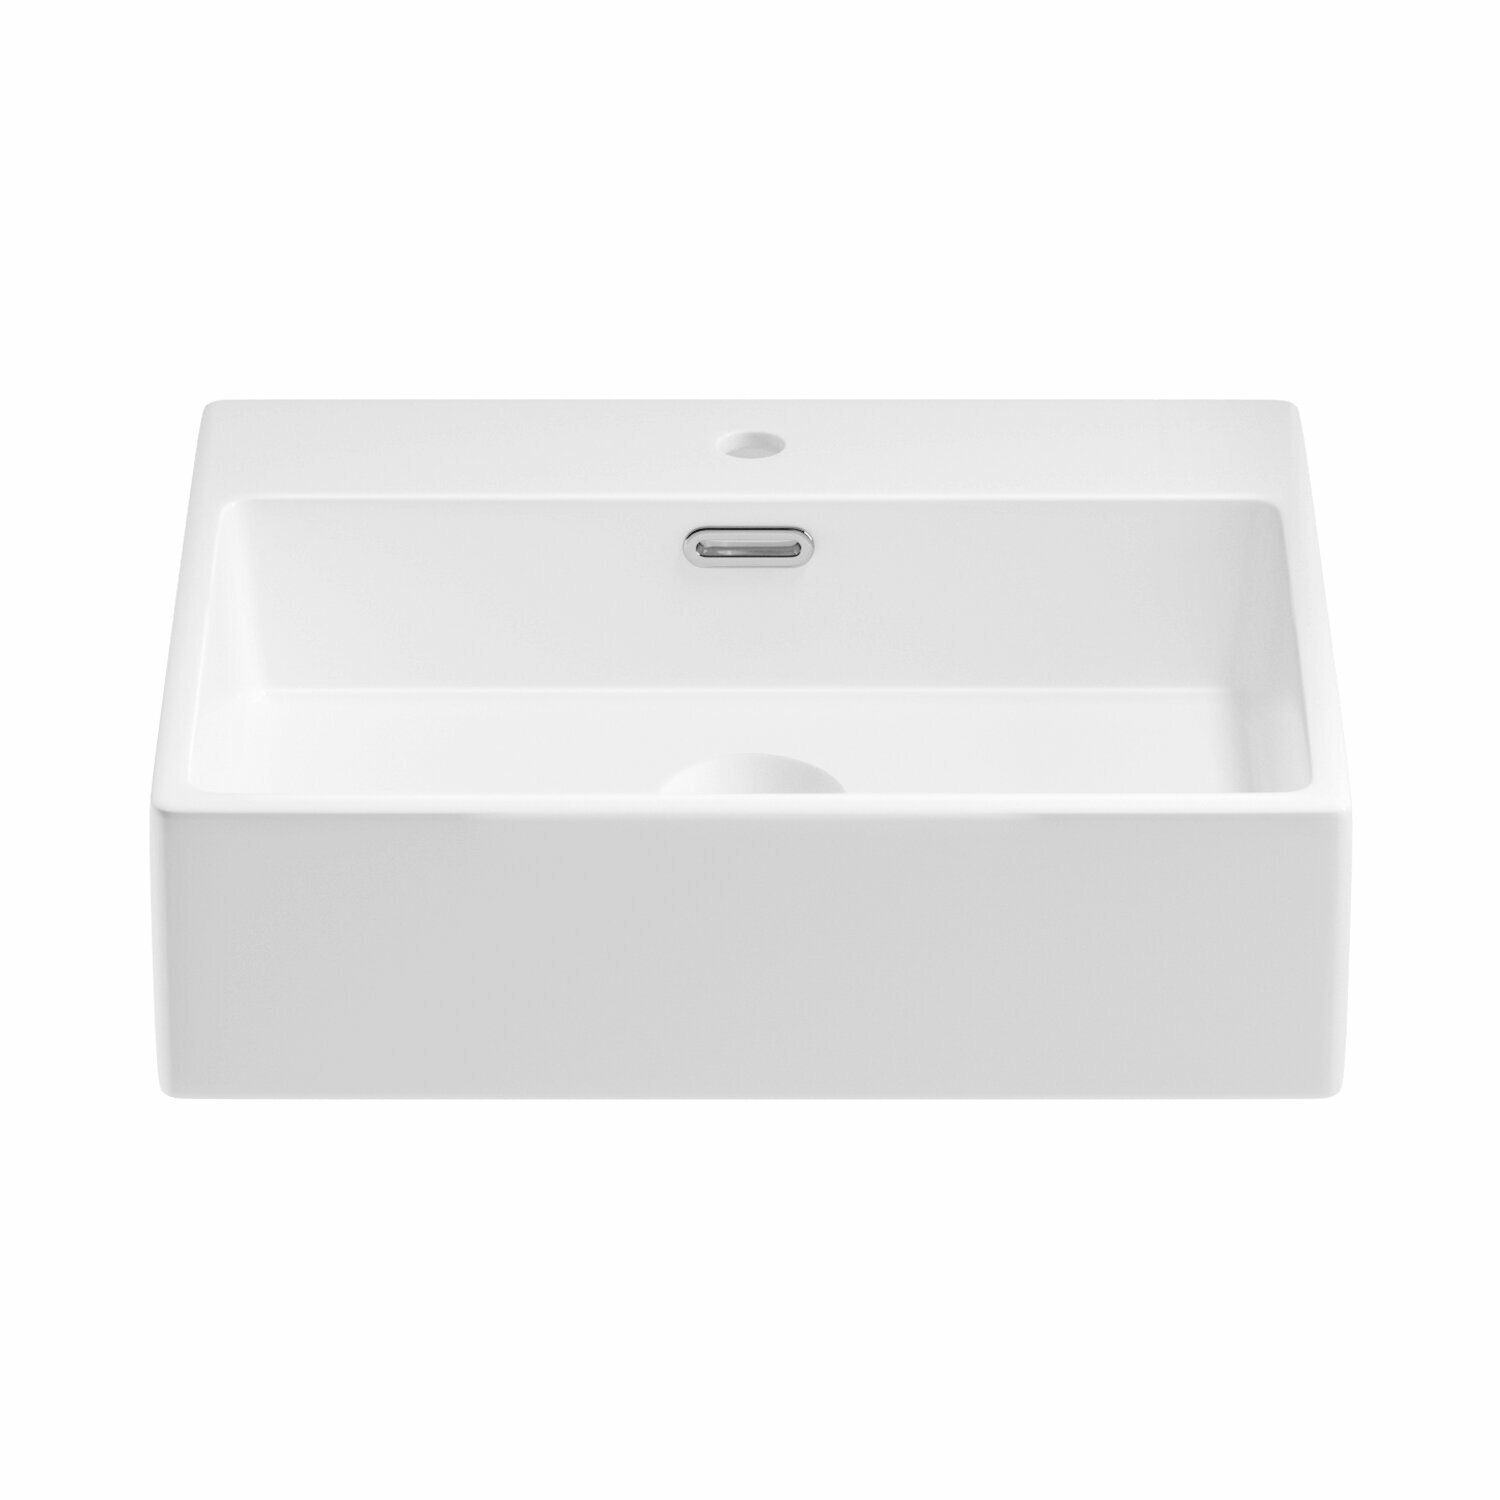 Подвесная/накладная раковина для ванной комнаты Wellsee Graceful Pro 150902000, ширина умывальника 50 см, цвет глянцевый белый